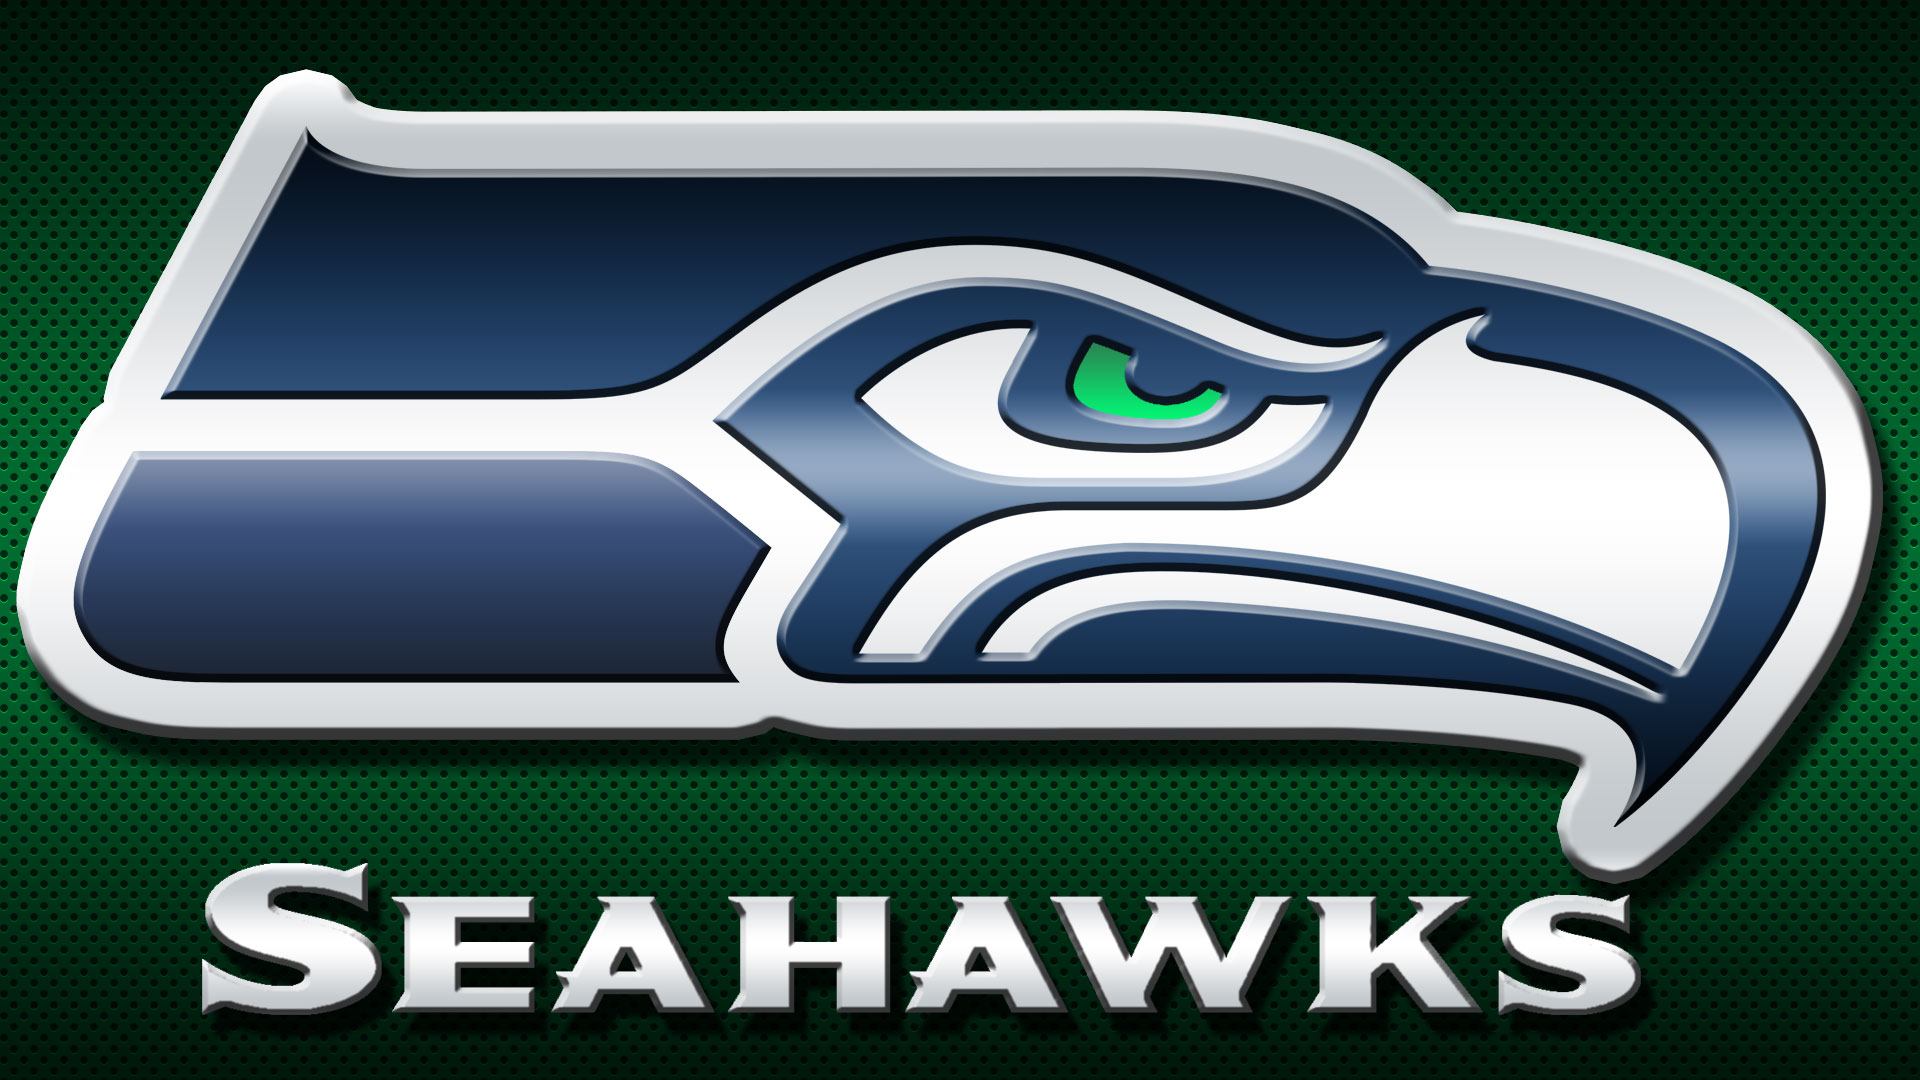 Seahawks logo by Balsavor on